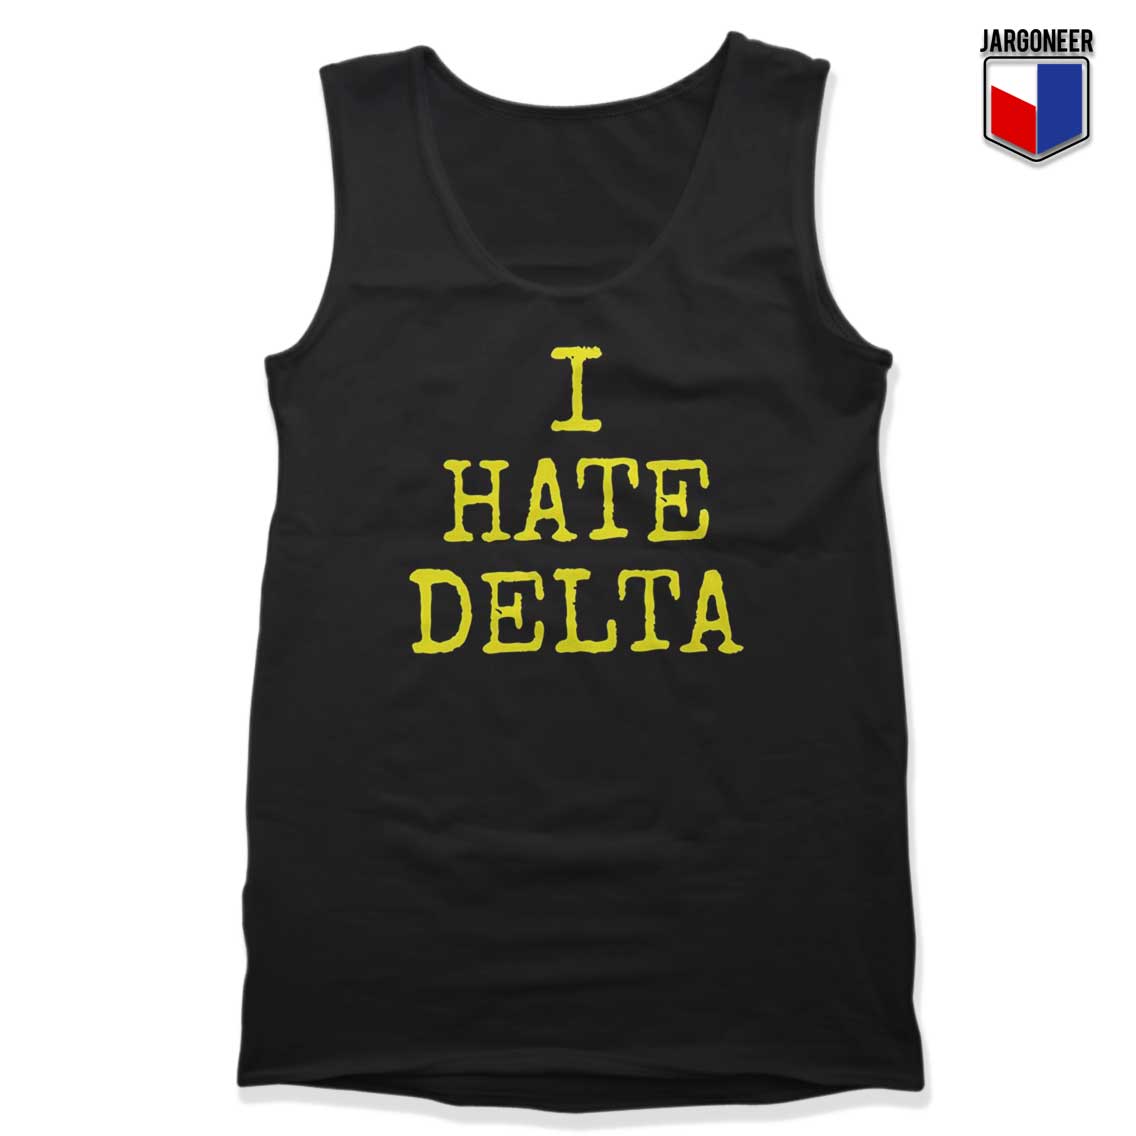 I hate Delta Tank Top - Shop Unique Graphic Cool Shirt Designs